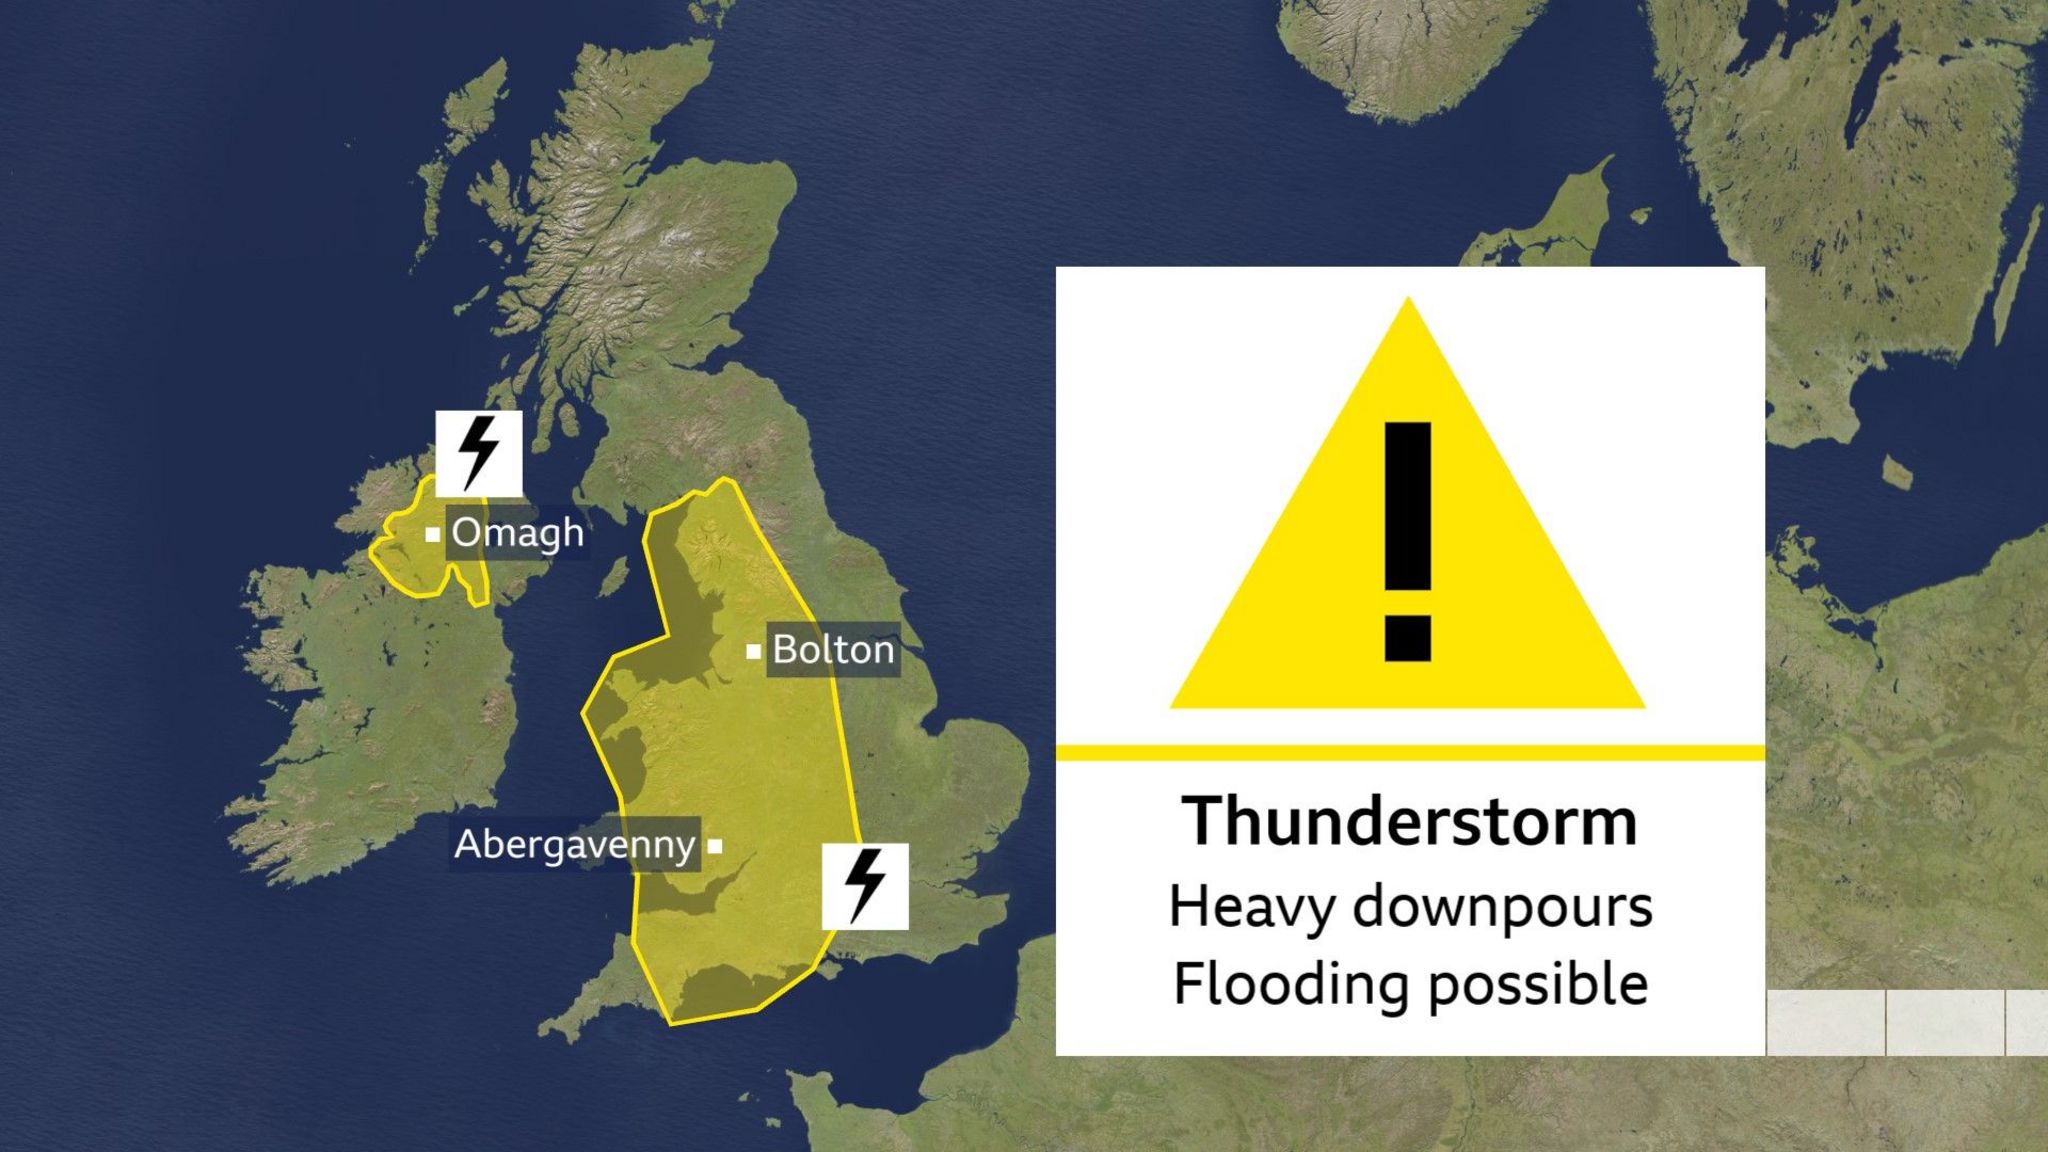 UK map showing yellow thunderstorm warning areas